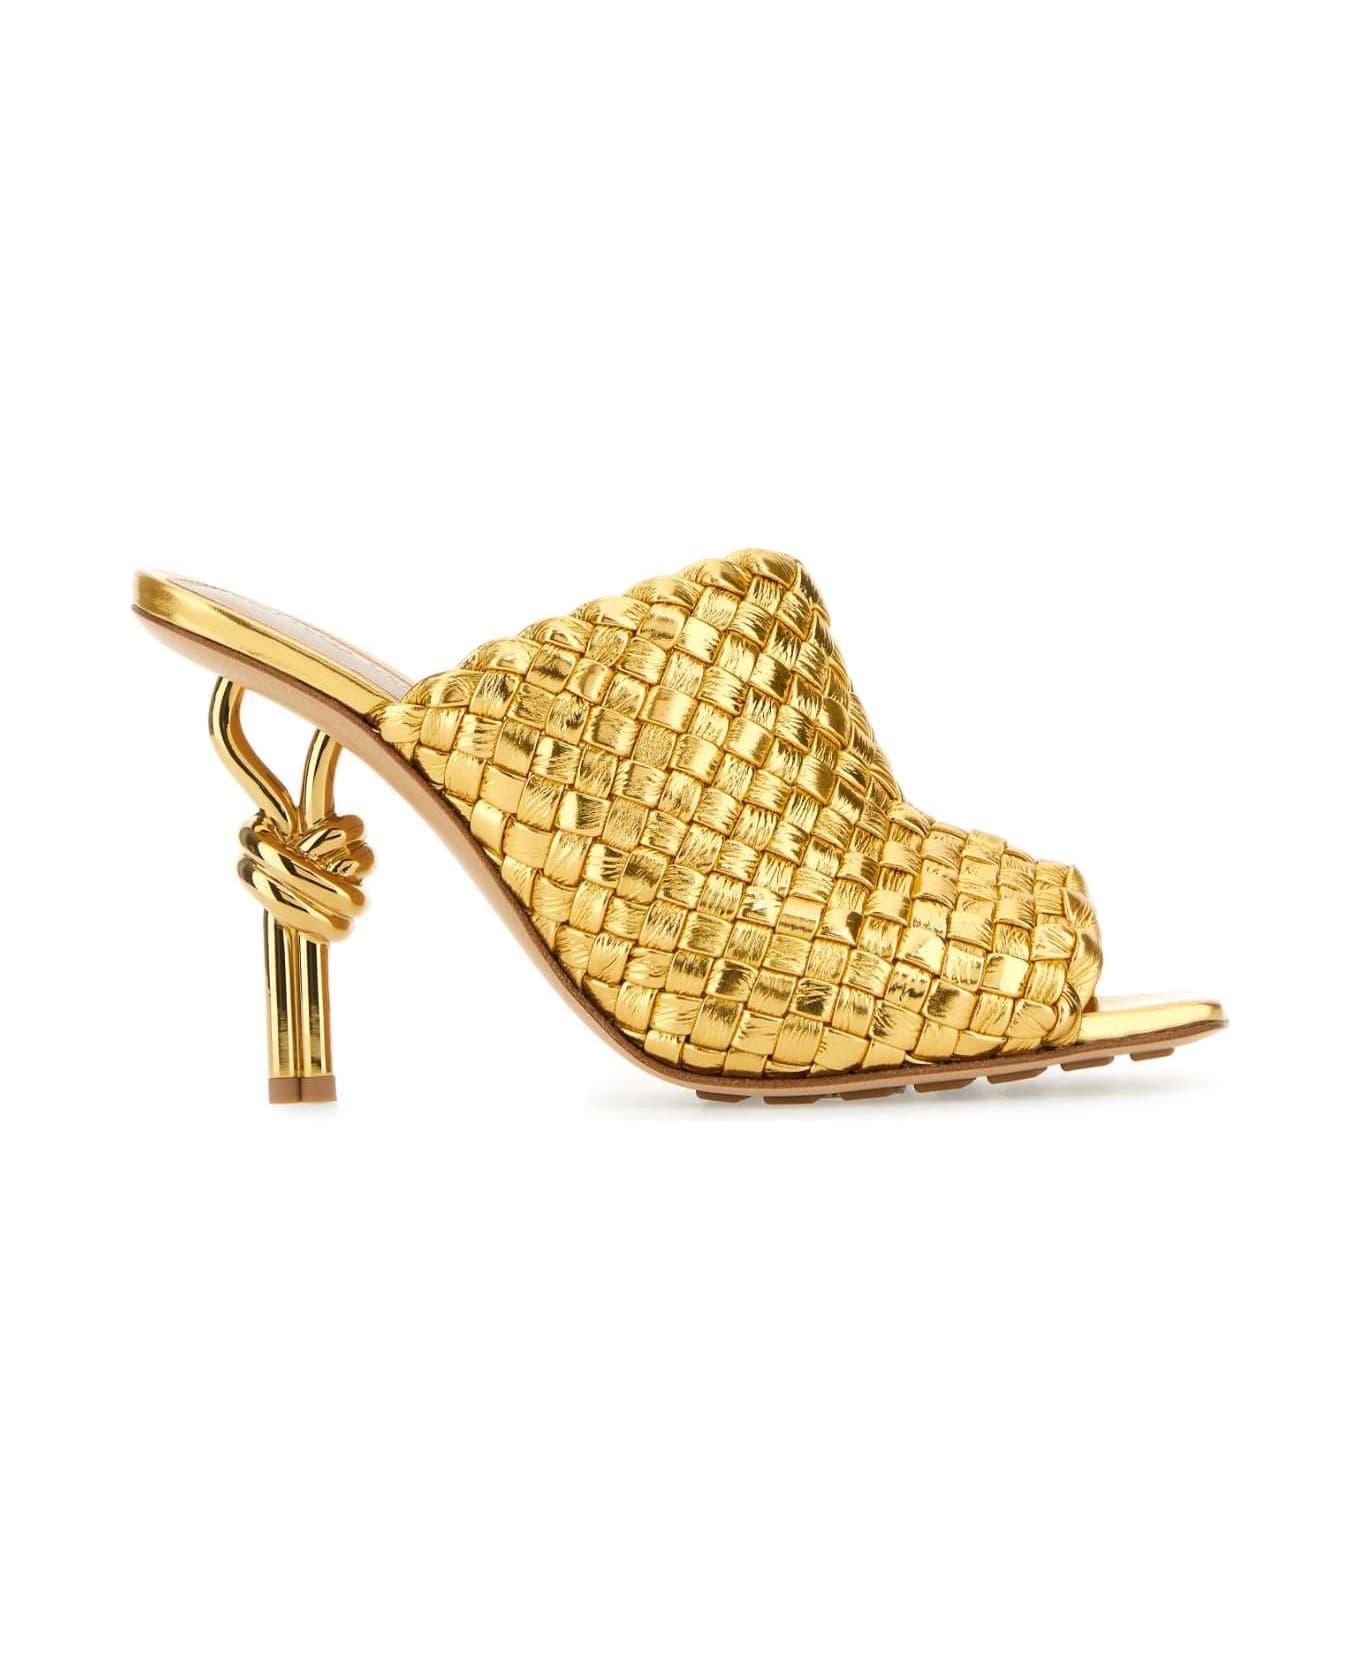 Bottega Veneta Golden Leather Knot Mules - GOLD